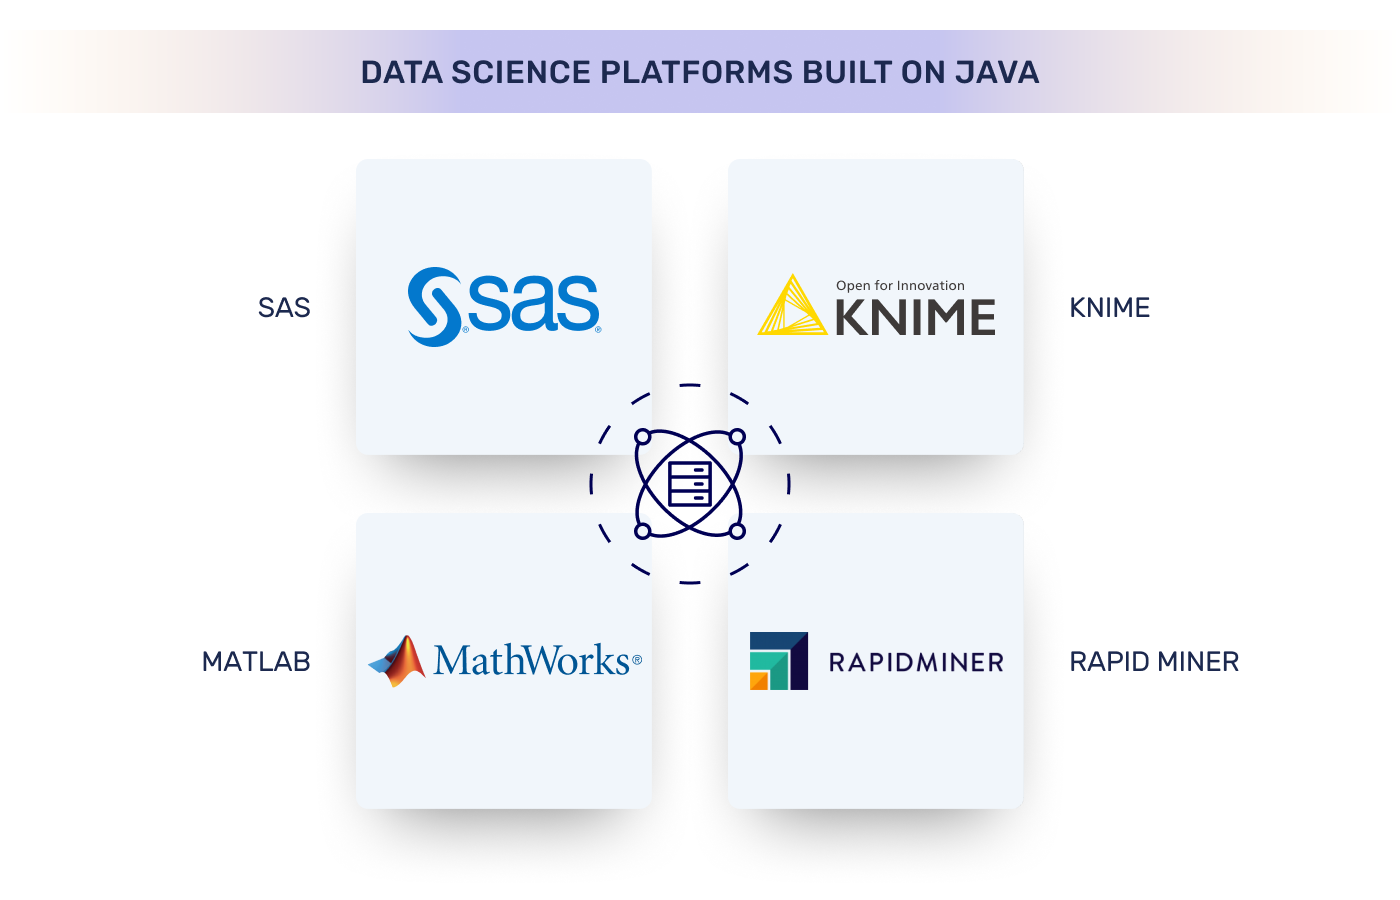 Data Science Platforms built on Java